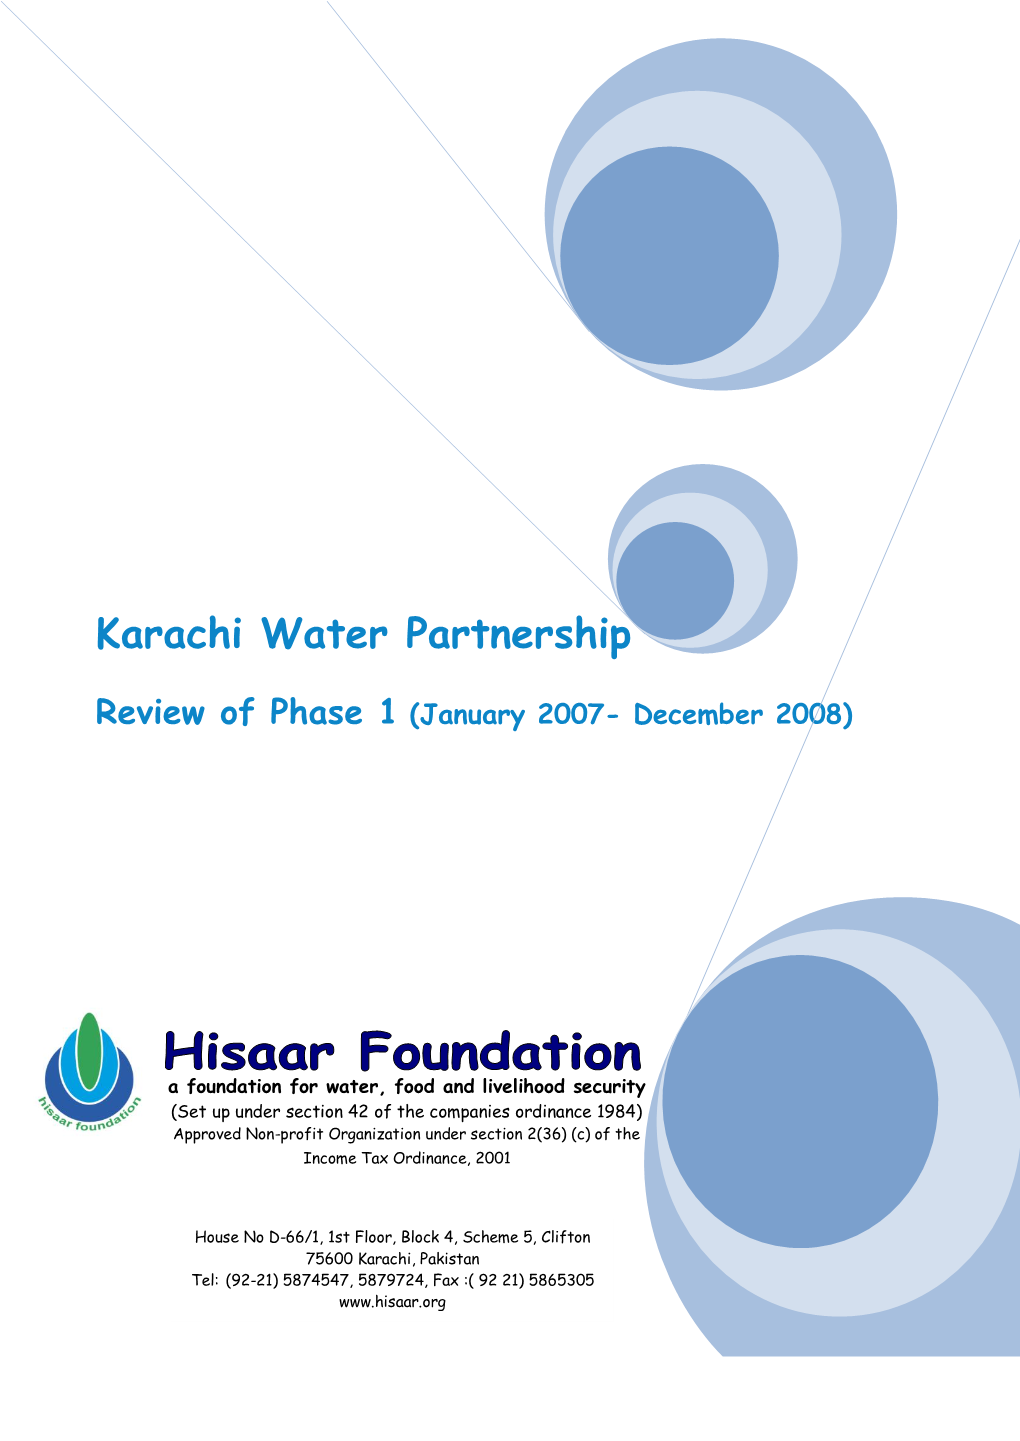 Karachi Water Partnership Review